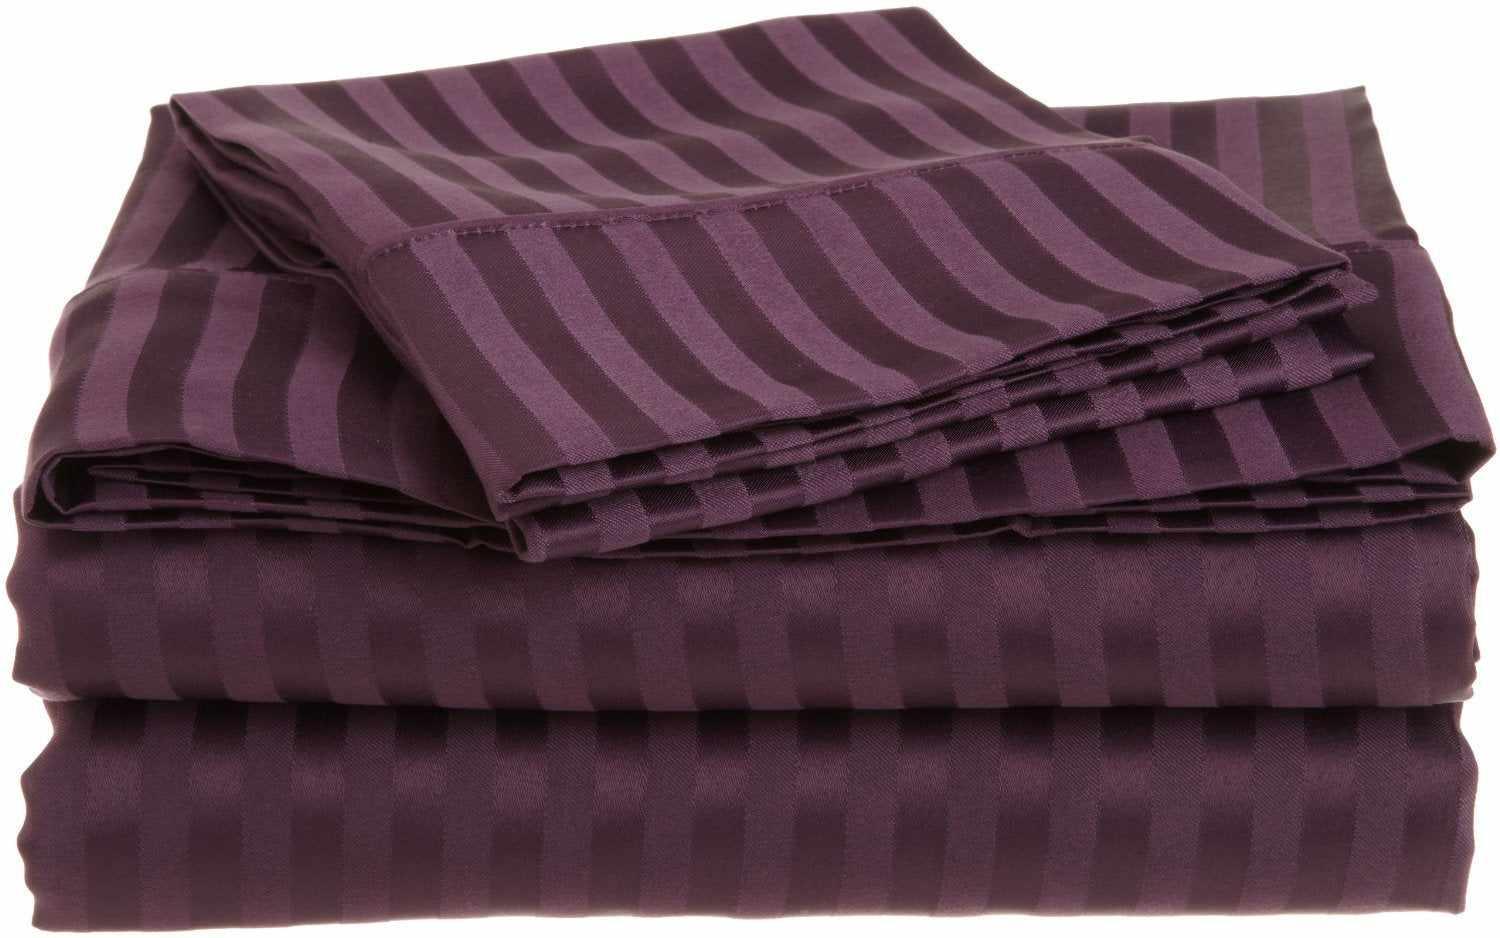 Superior Microfiber Wrinkle Resistant and Breathable Stripe Deep Pocket Bed Sheet Set - Plum